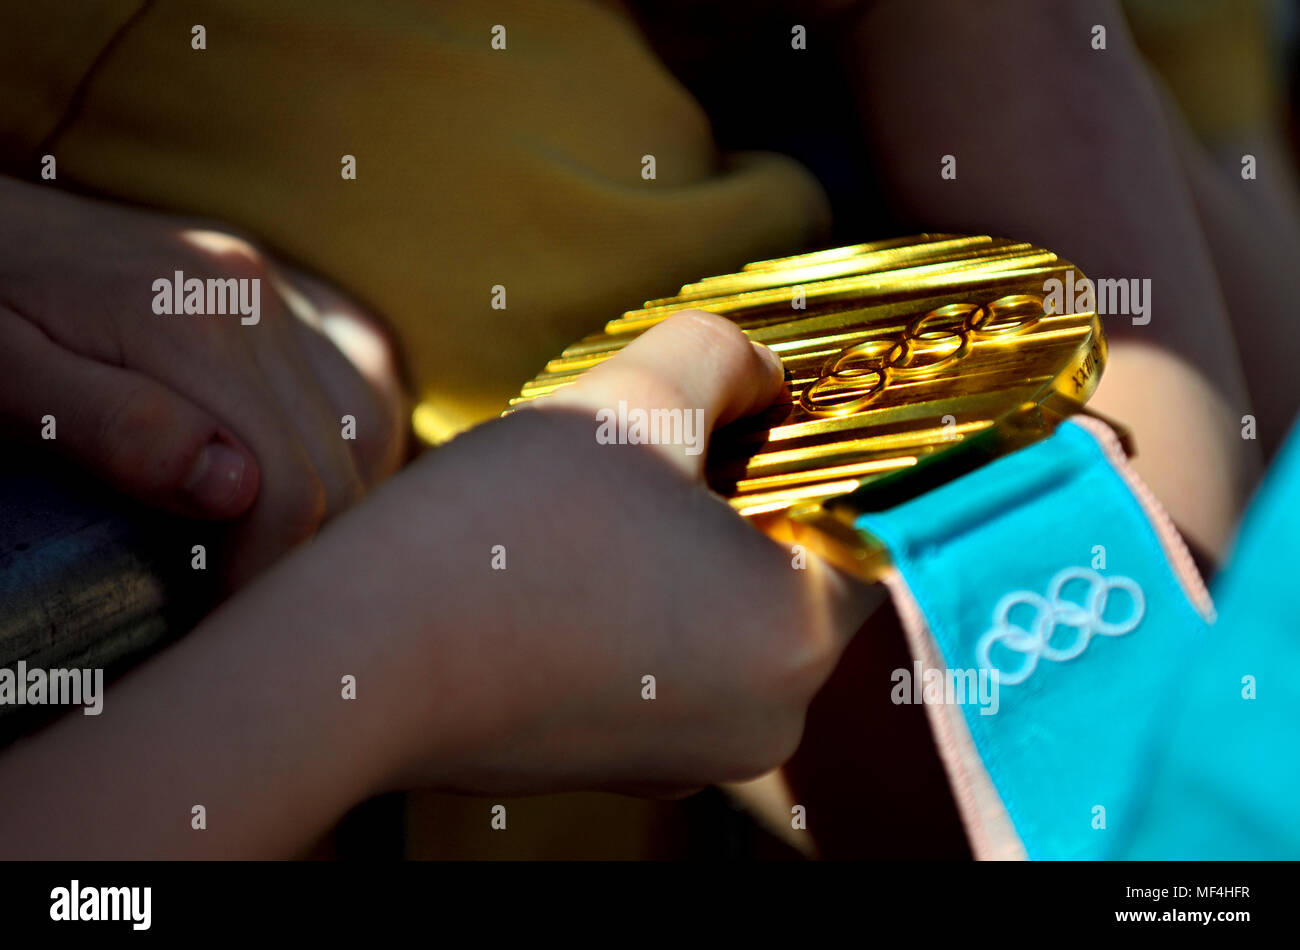 Winter-olympischen Goldmedaille - Kinder holding Lizzy yarnold's skeleton Goldmedaille von PyongChang 2018 Stockfoto